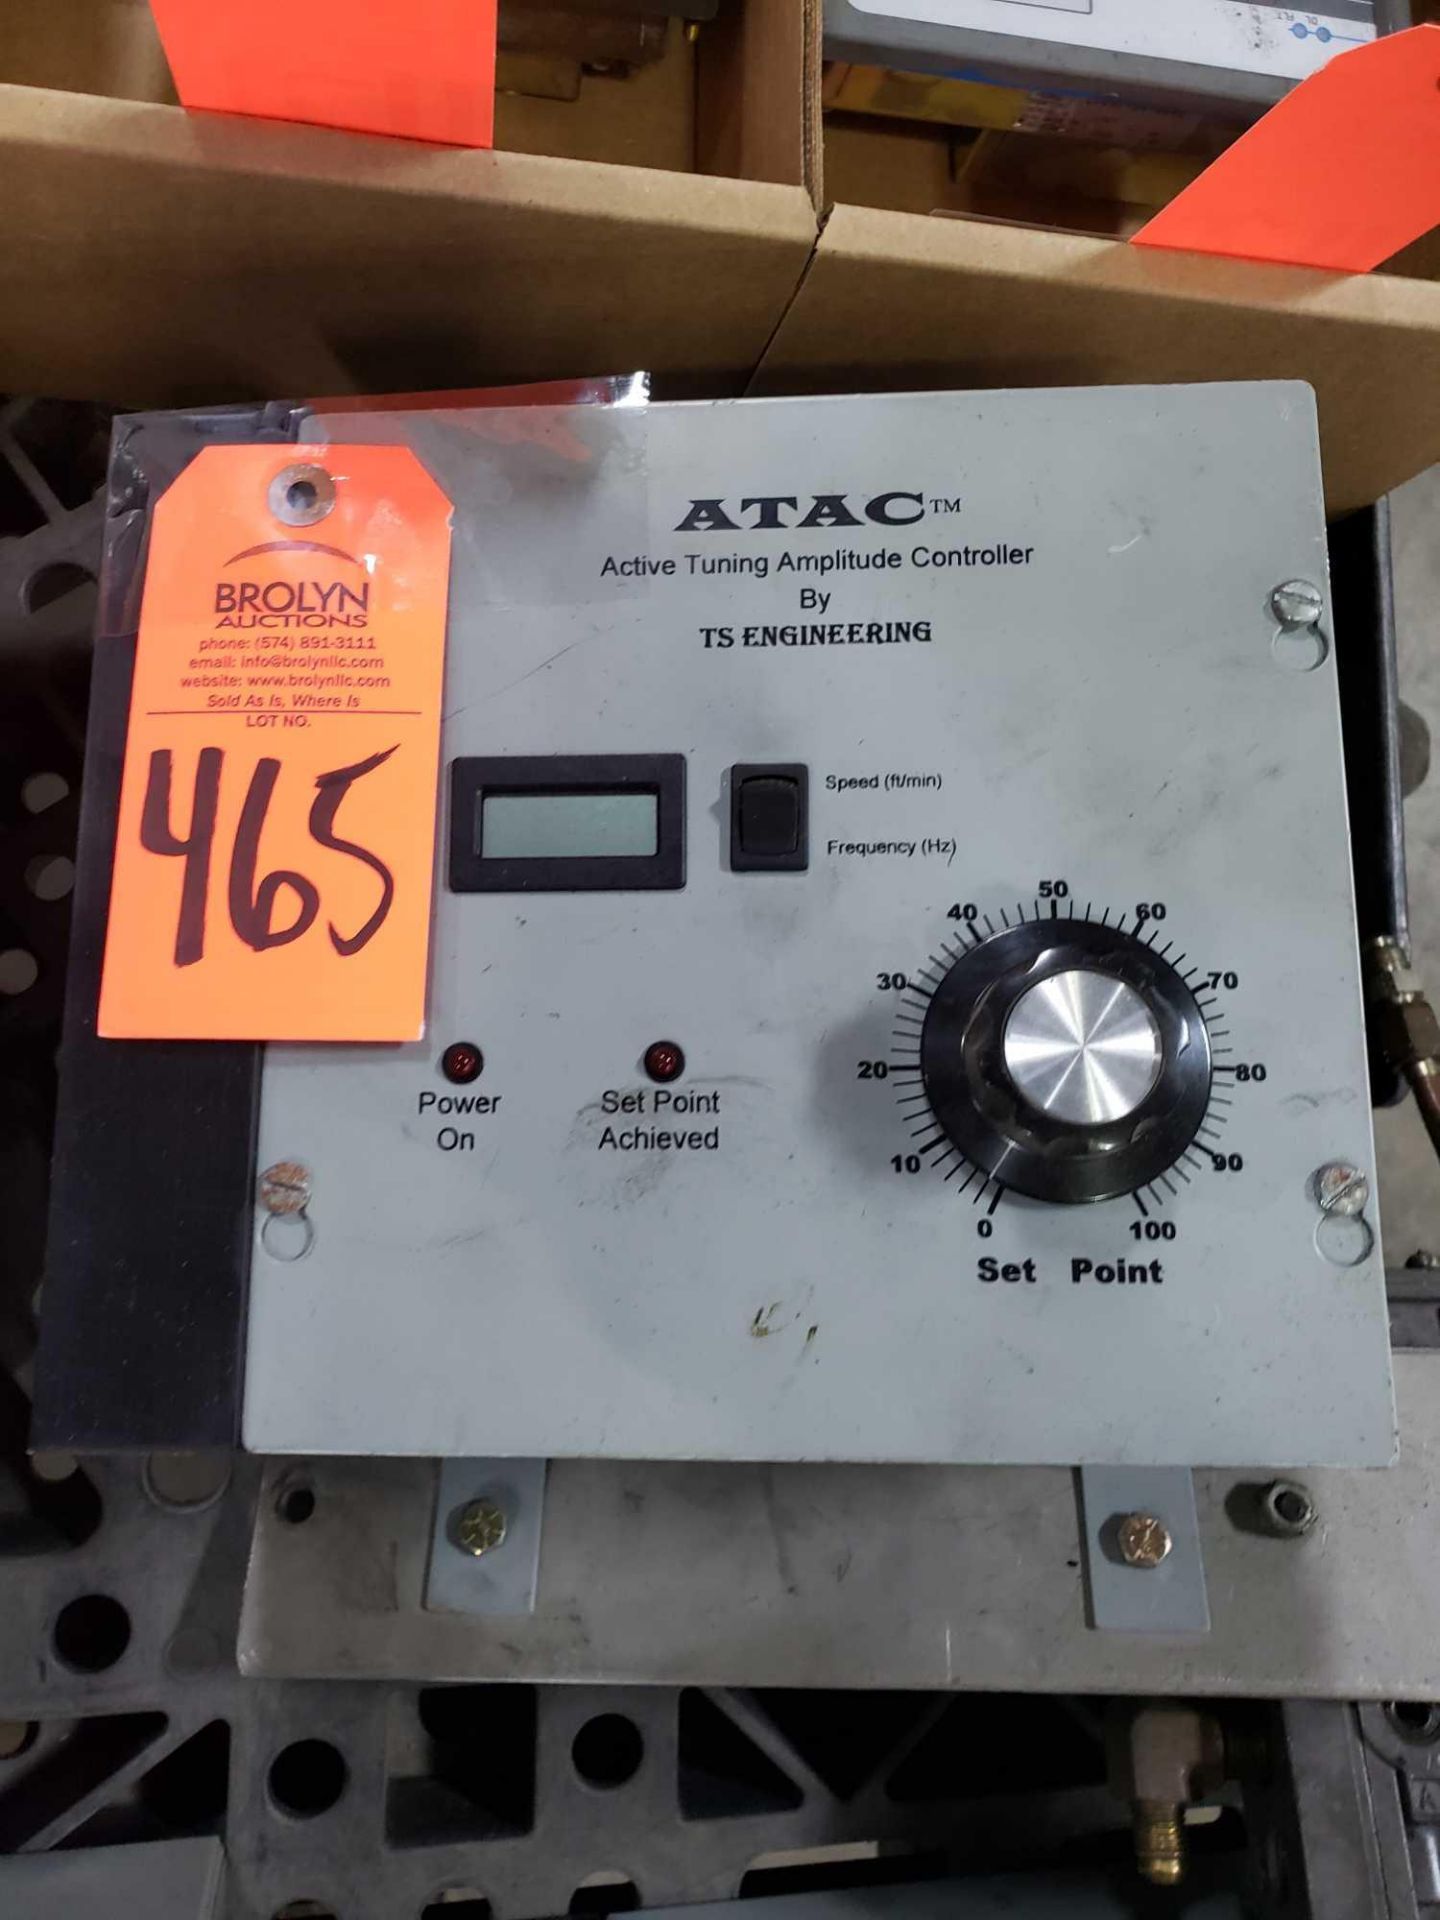 TS Engineering ATC active tuning amplitude controller.